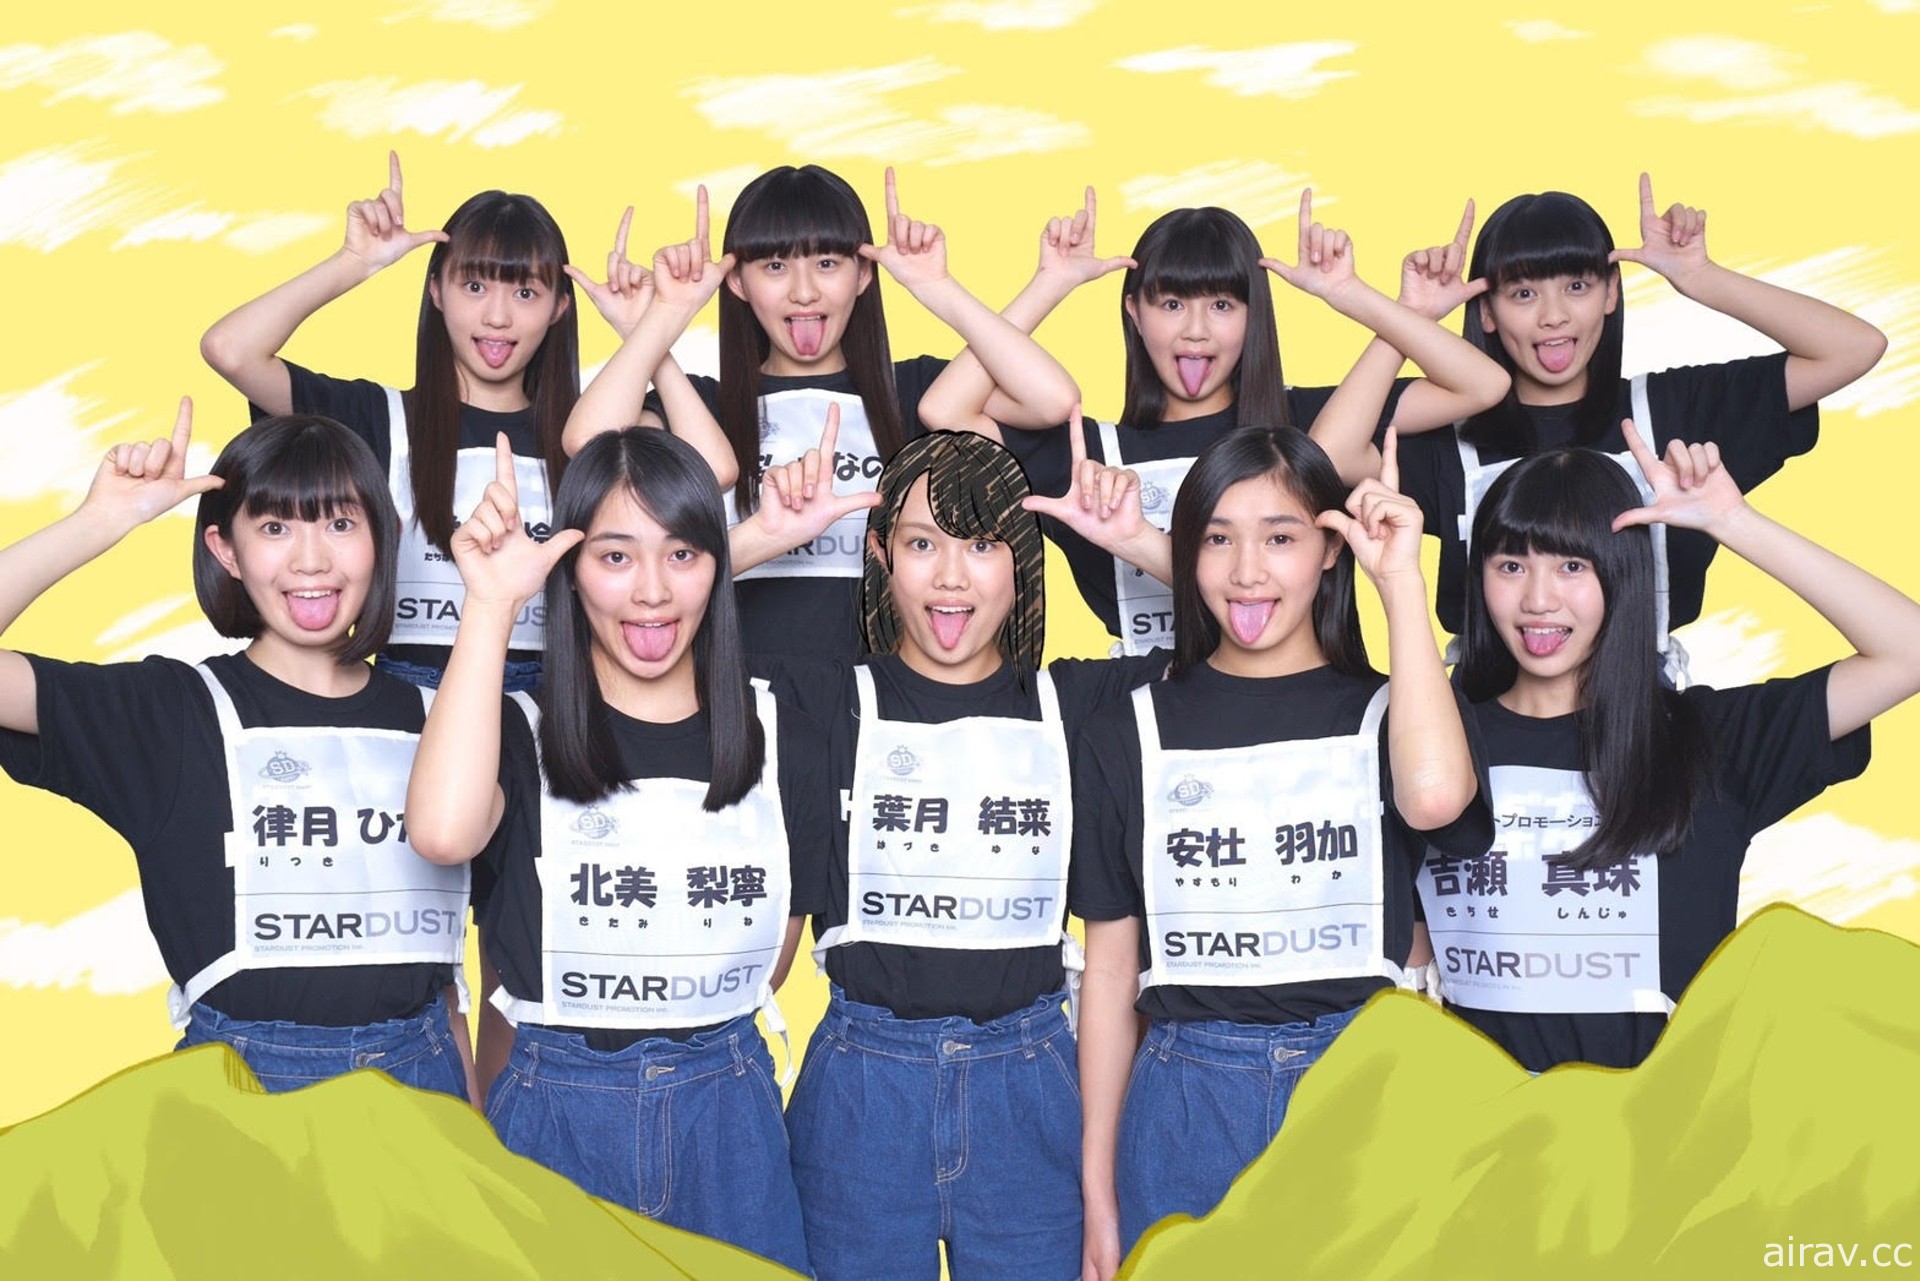 【TiCA21】ICHIBAN JAPAN 日本館 將邀多組歌手及動畫製作人連線舉辦活動